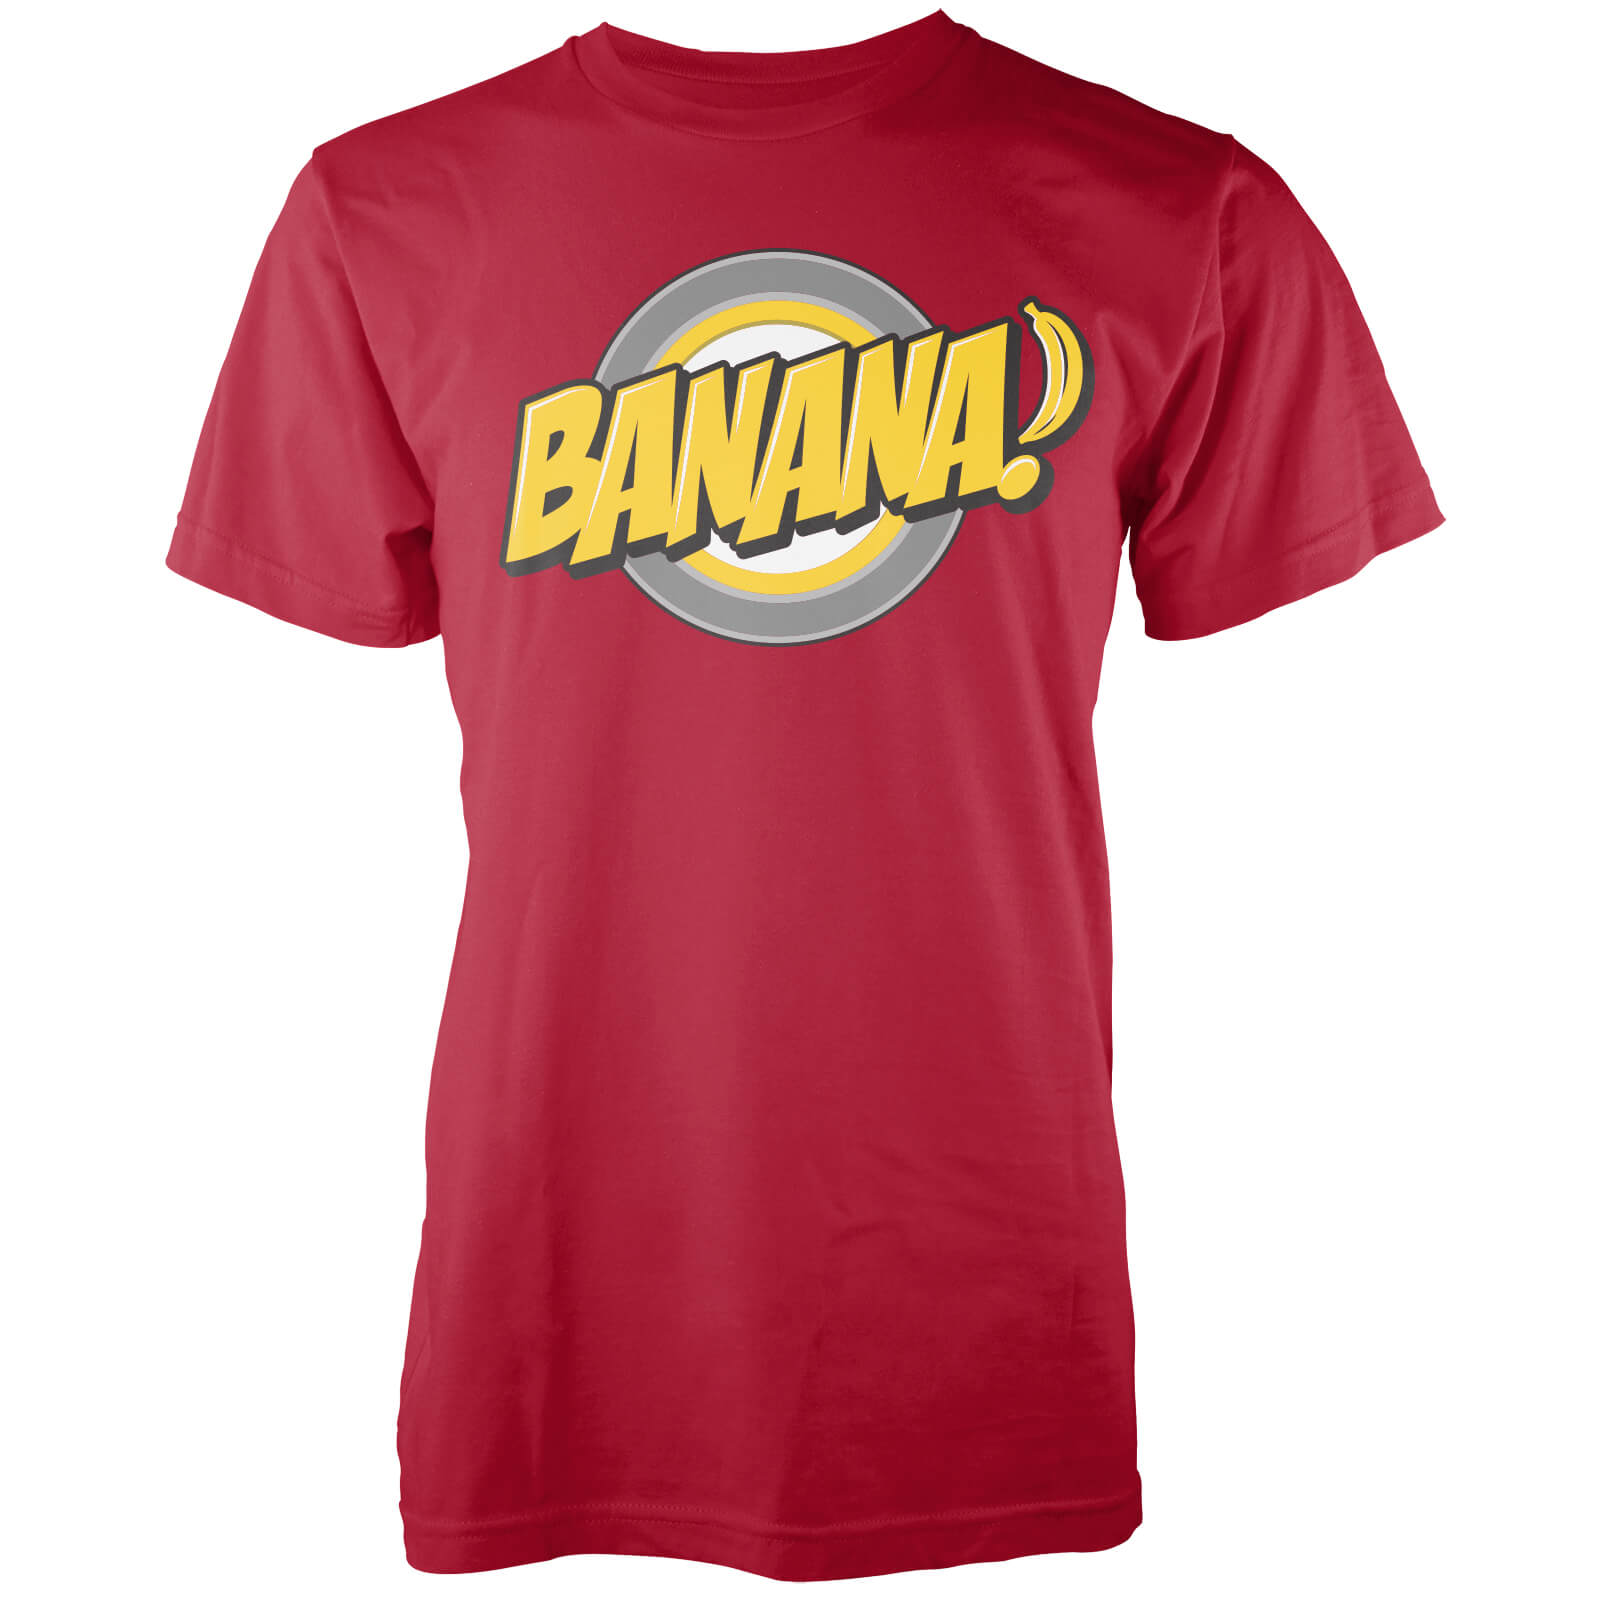 Banana Men's Red T-Shirt - S - Red